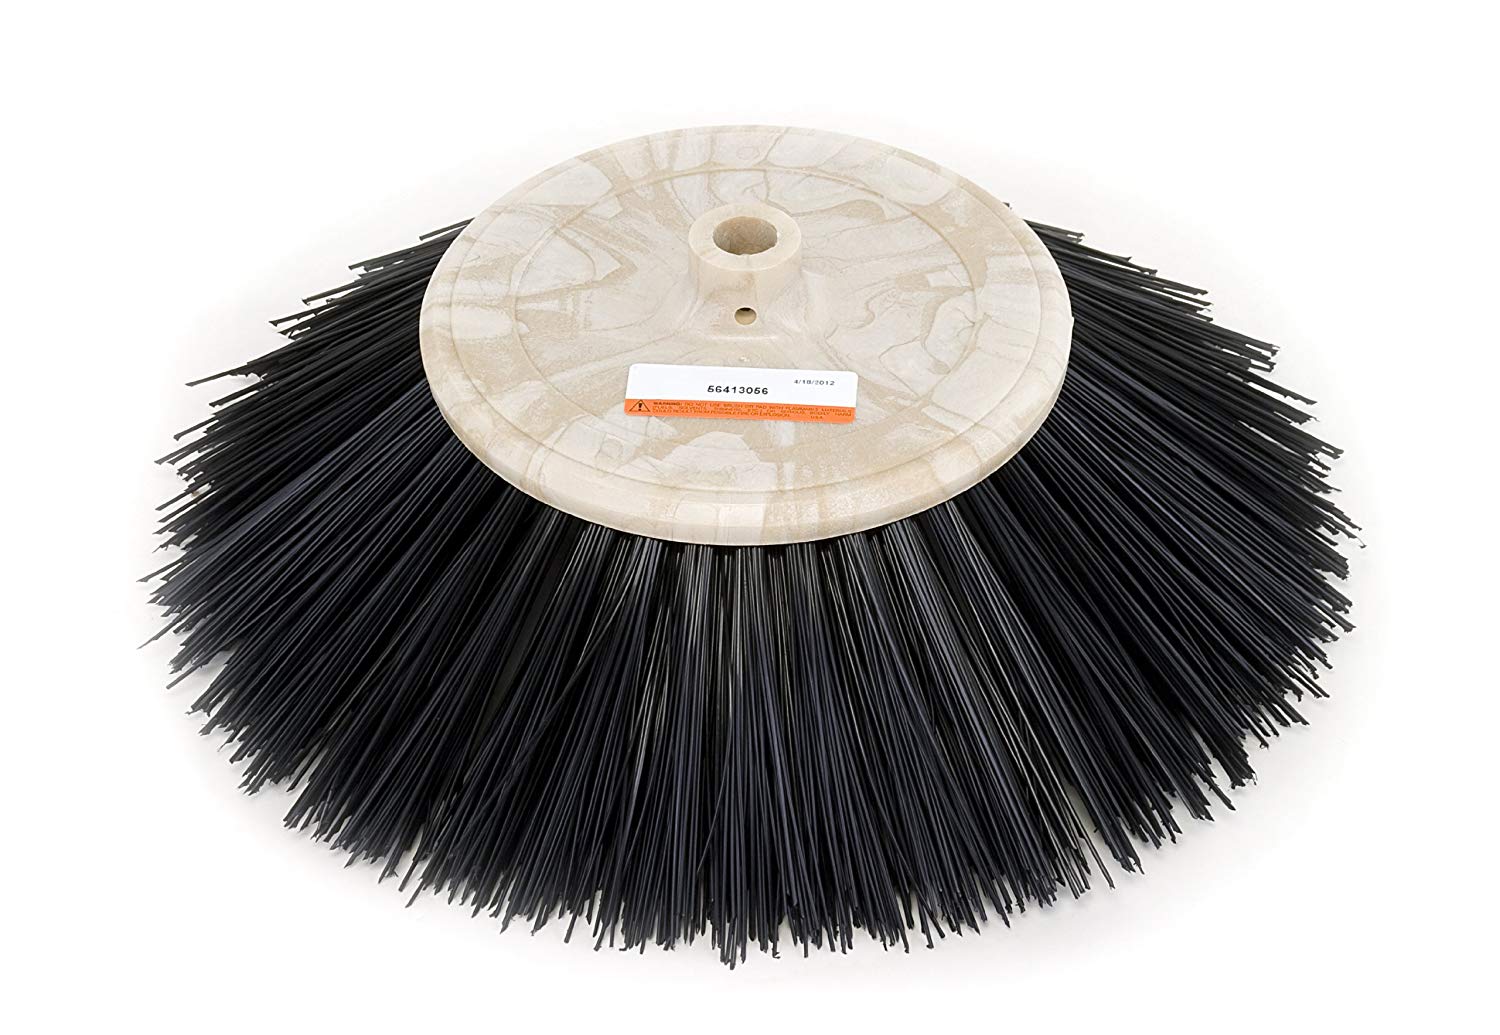 Nilfisk-Advance 56413056 Commercial Polypropylene All-Purpose Side Broom - CalCleaningEquipment